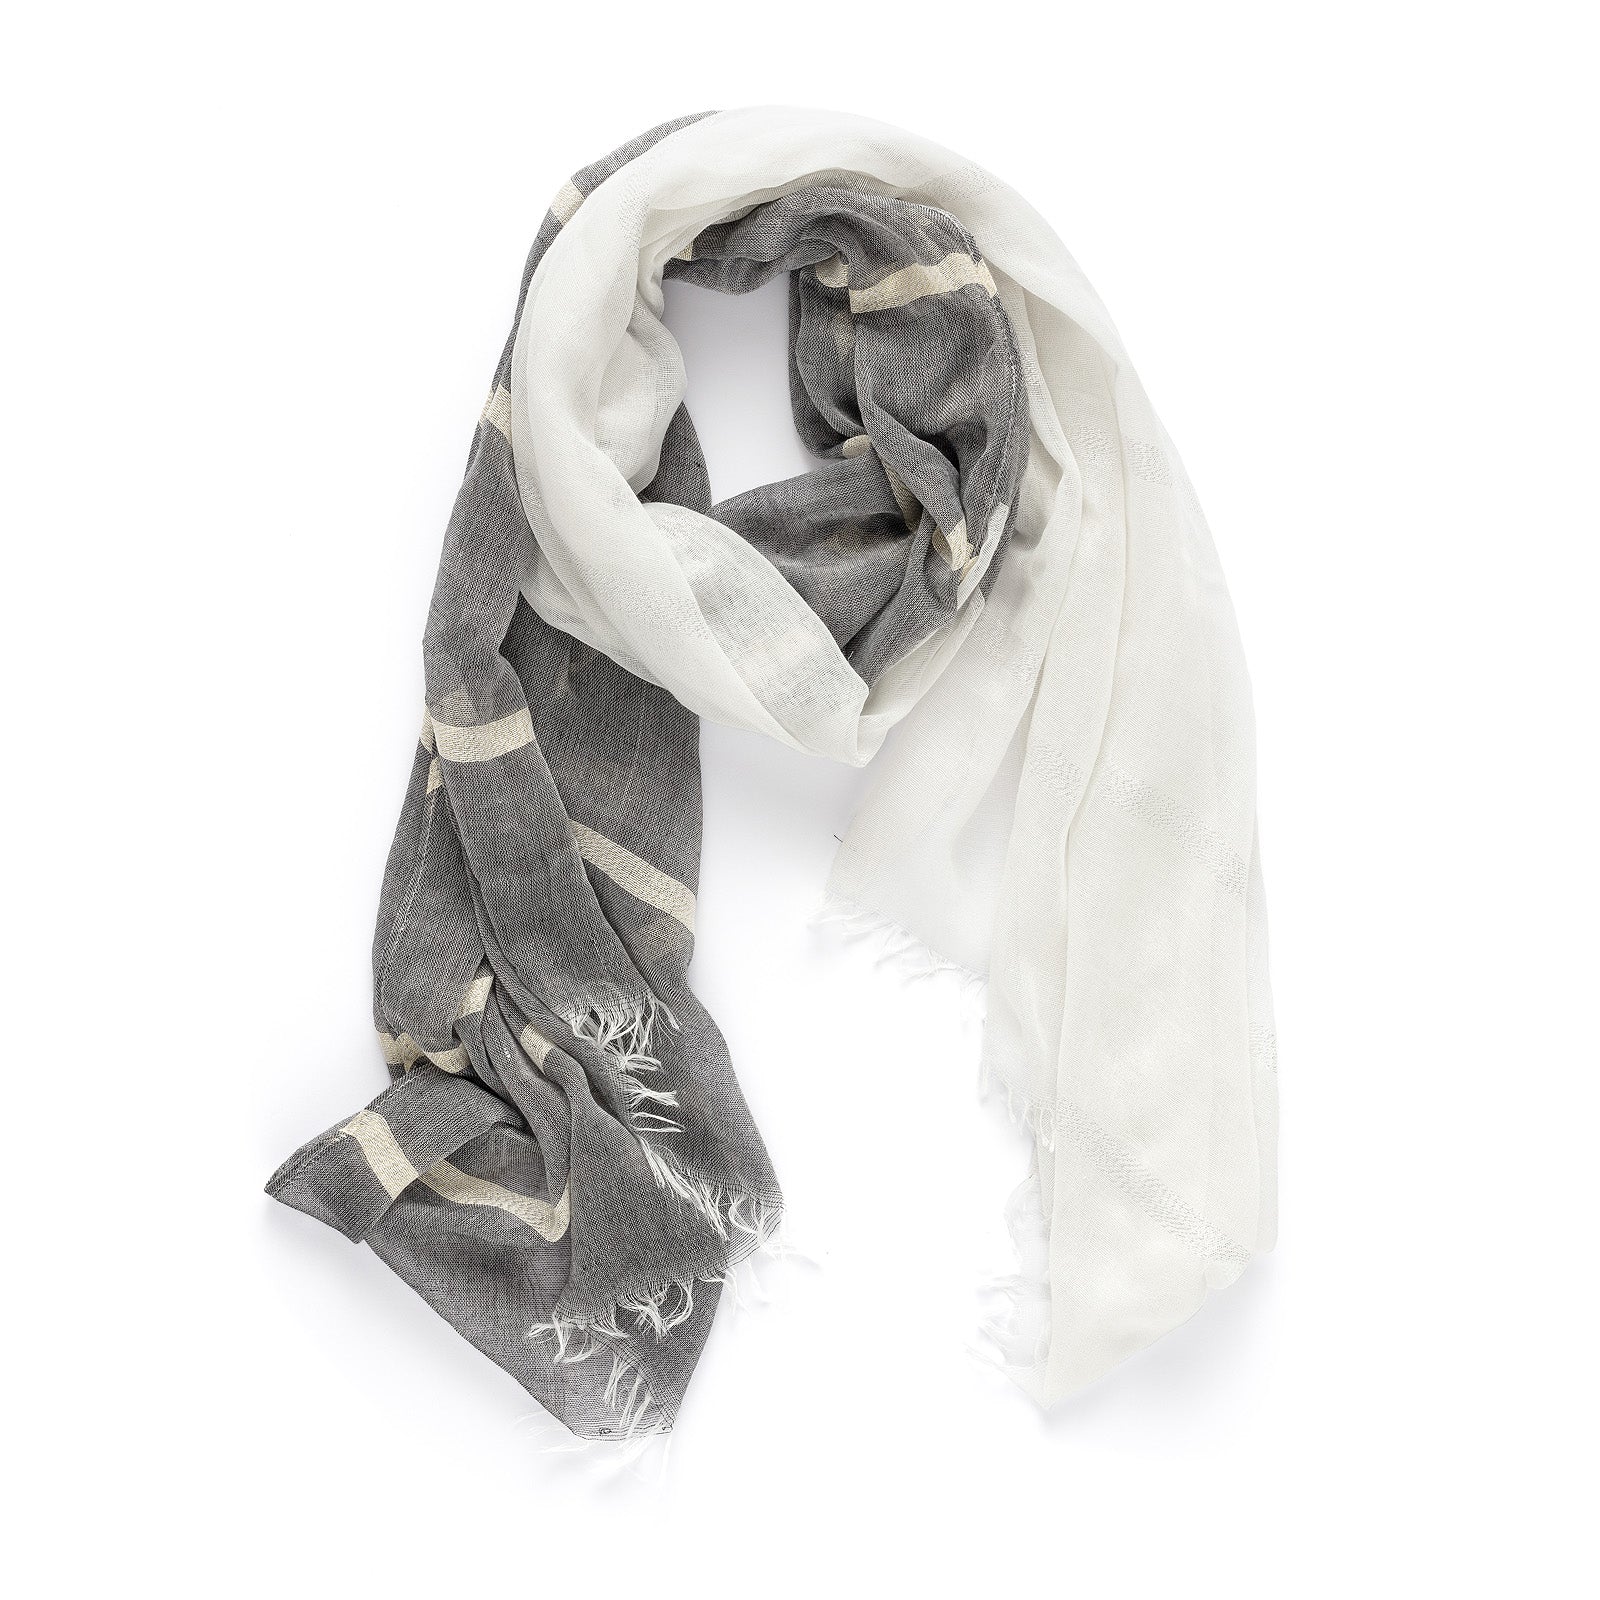 Silver Stripes scarf